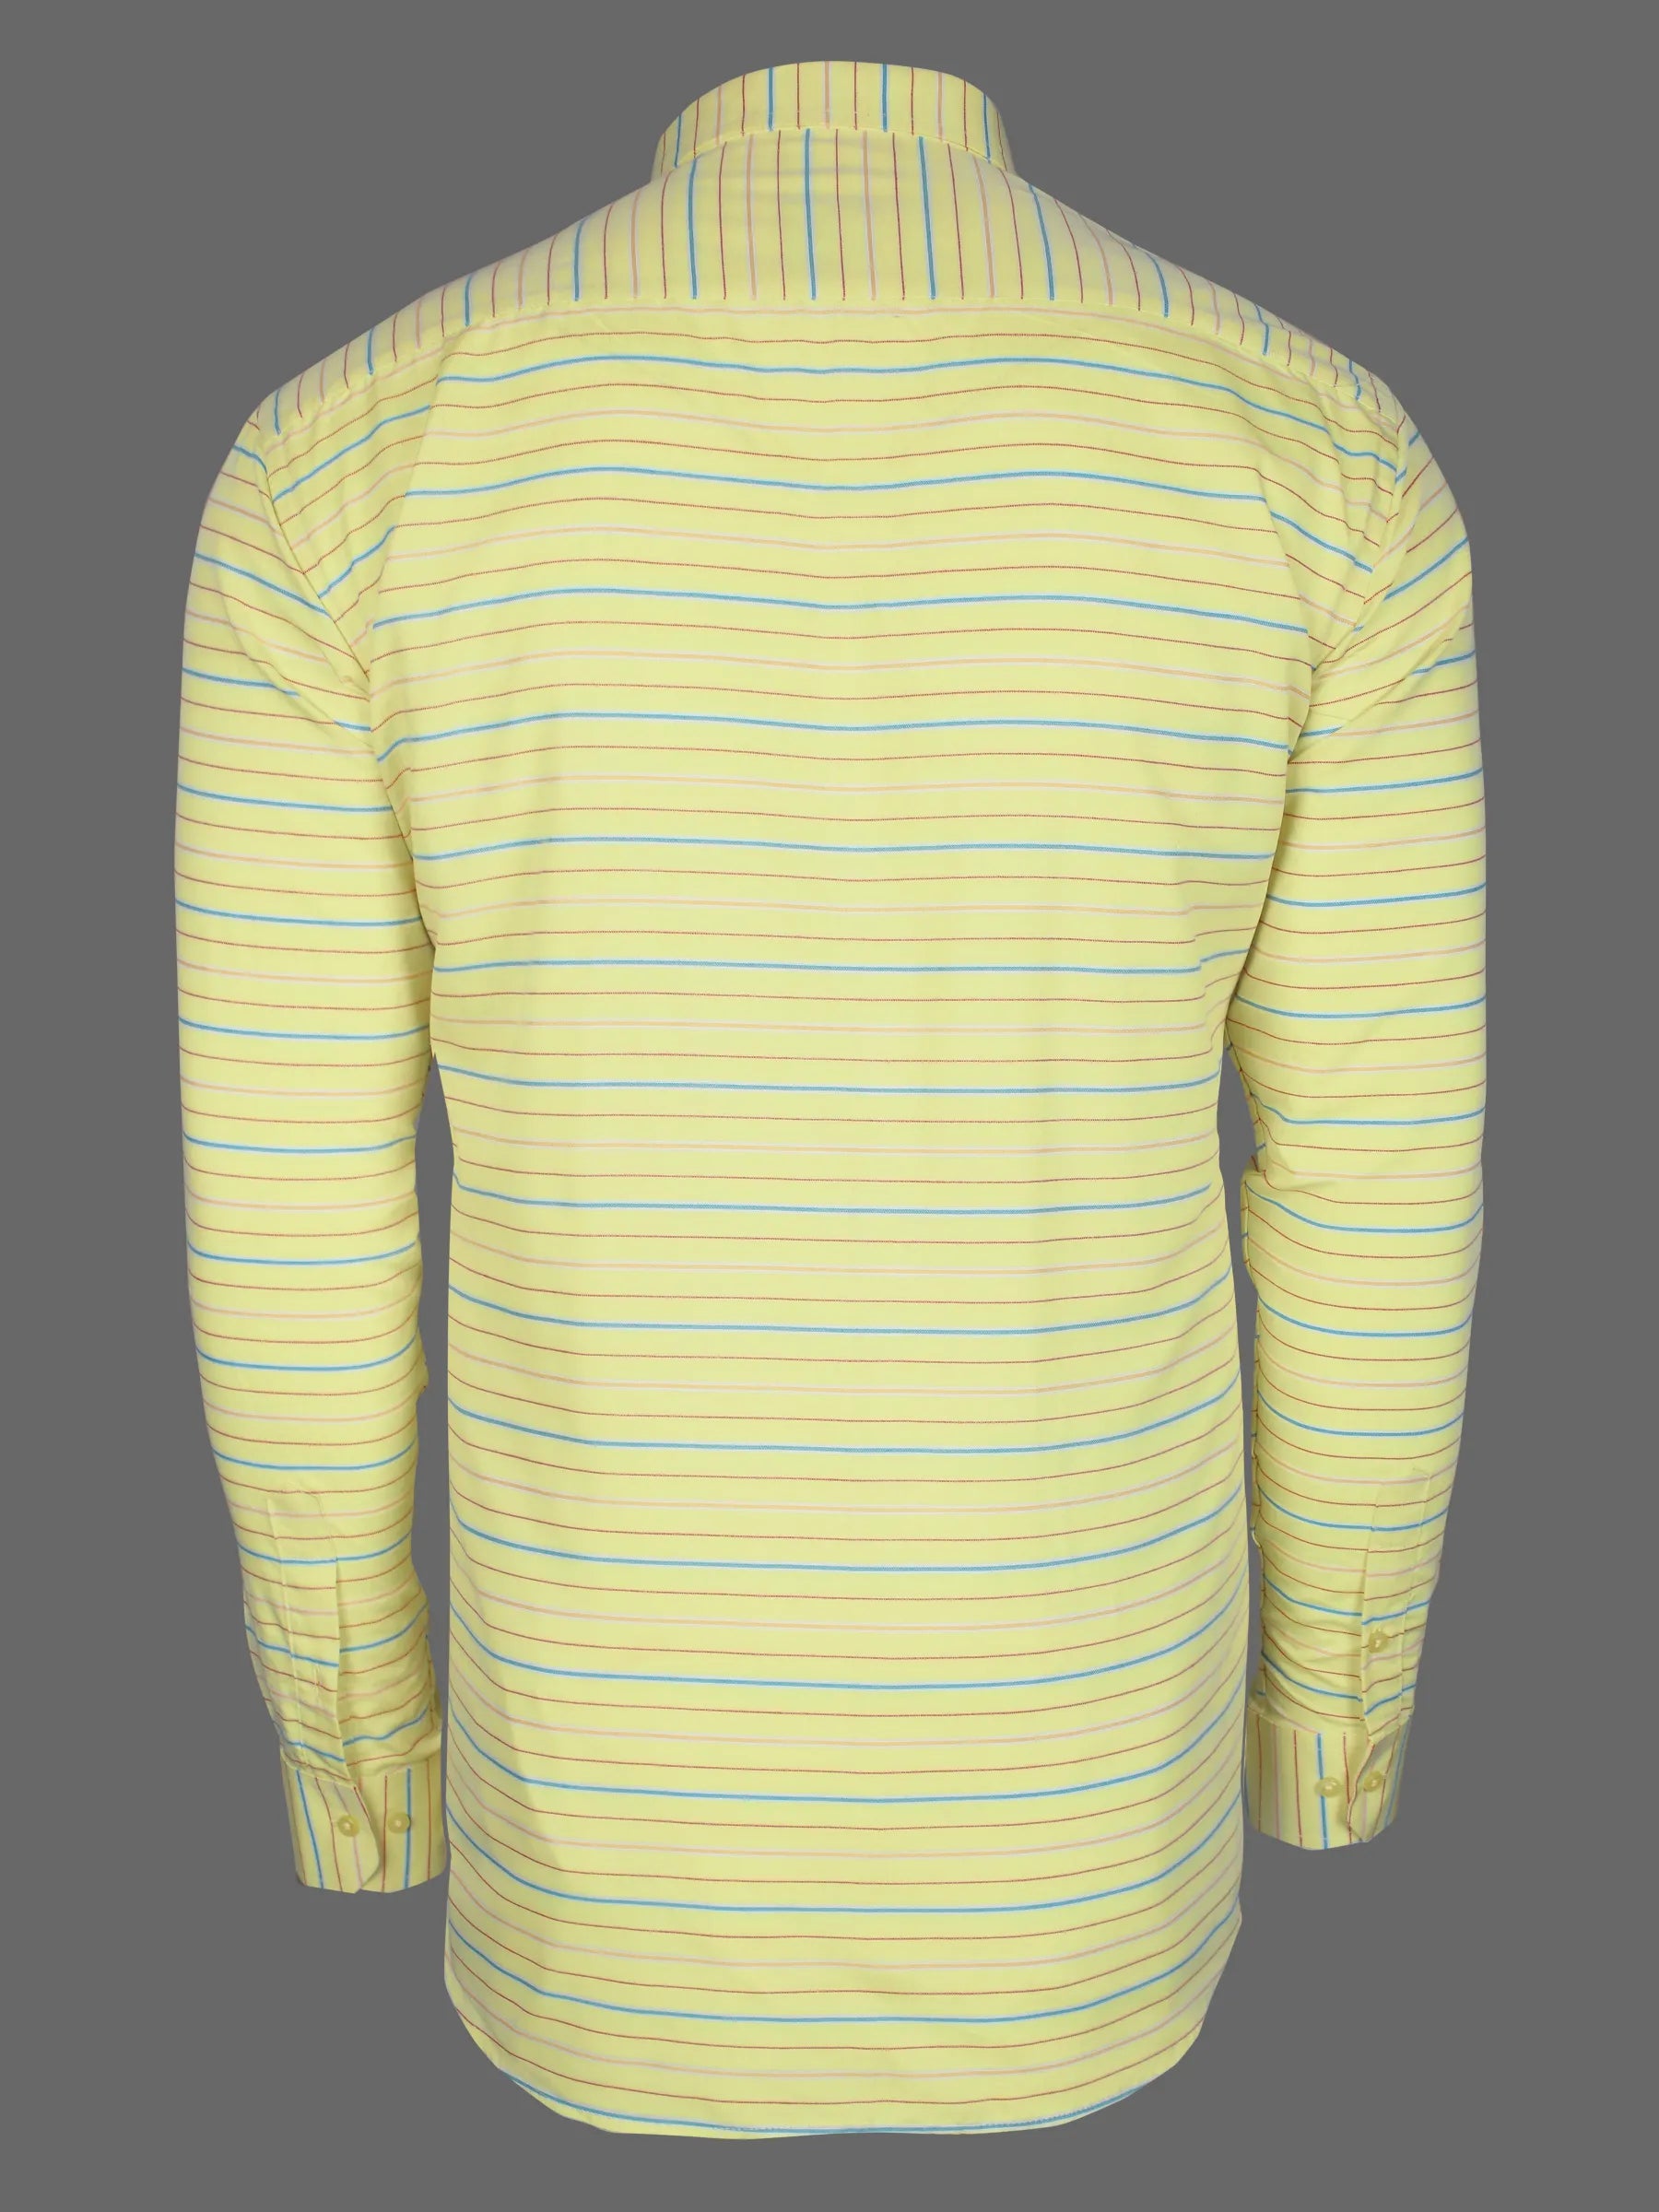 Unmellow Yellow  With Multicolored Stripe Premium Cotton Shirt-[ON SALE]